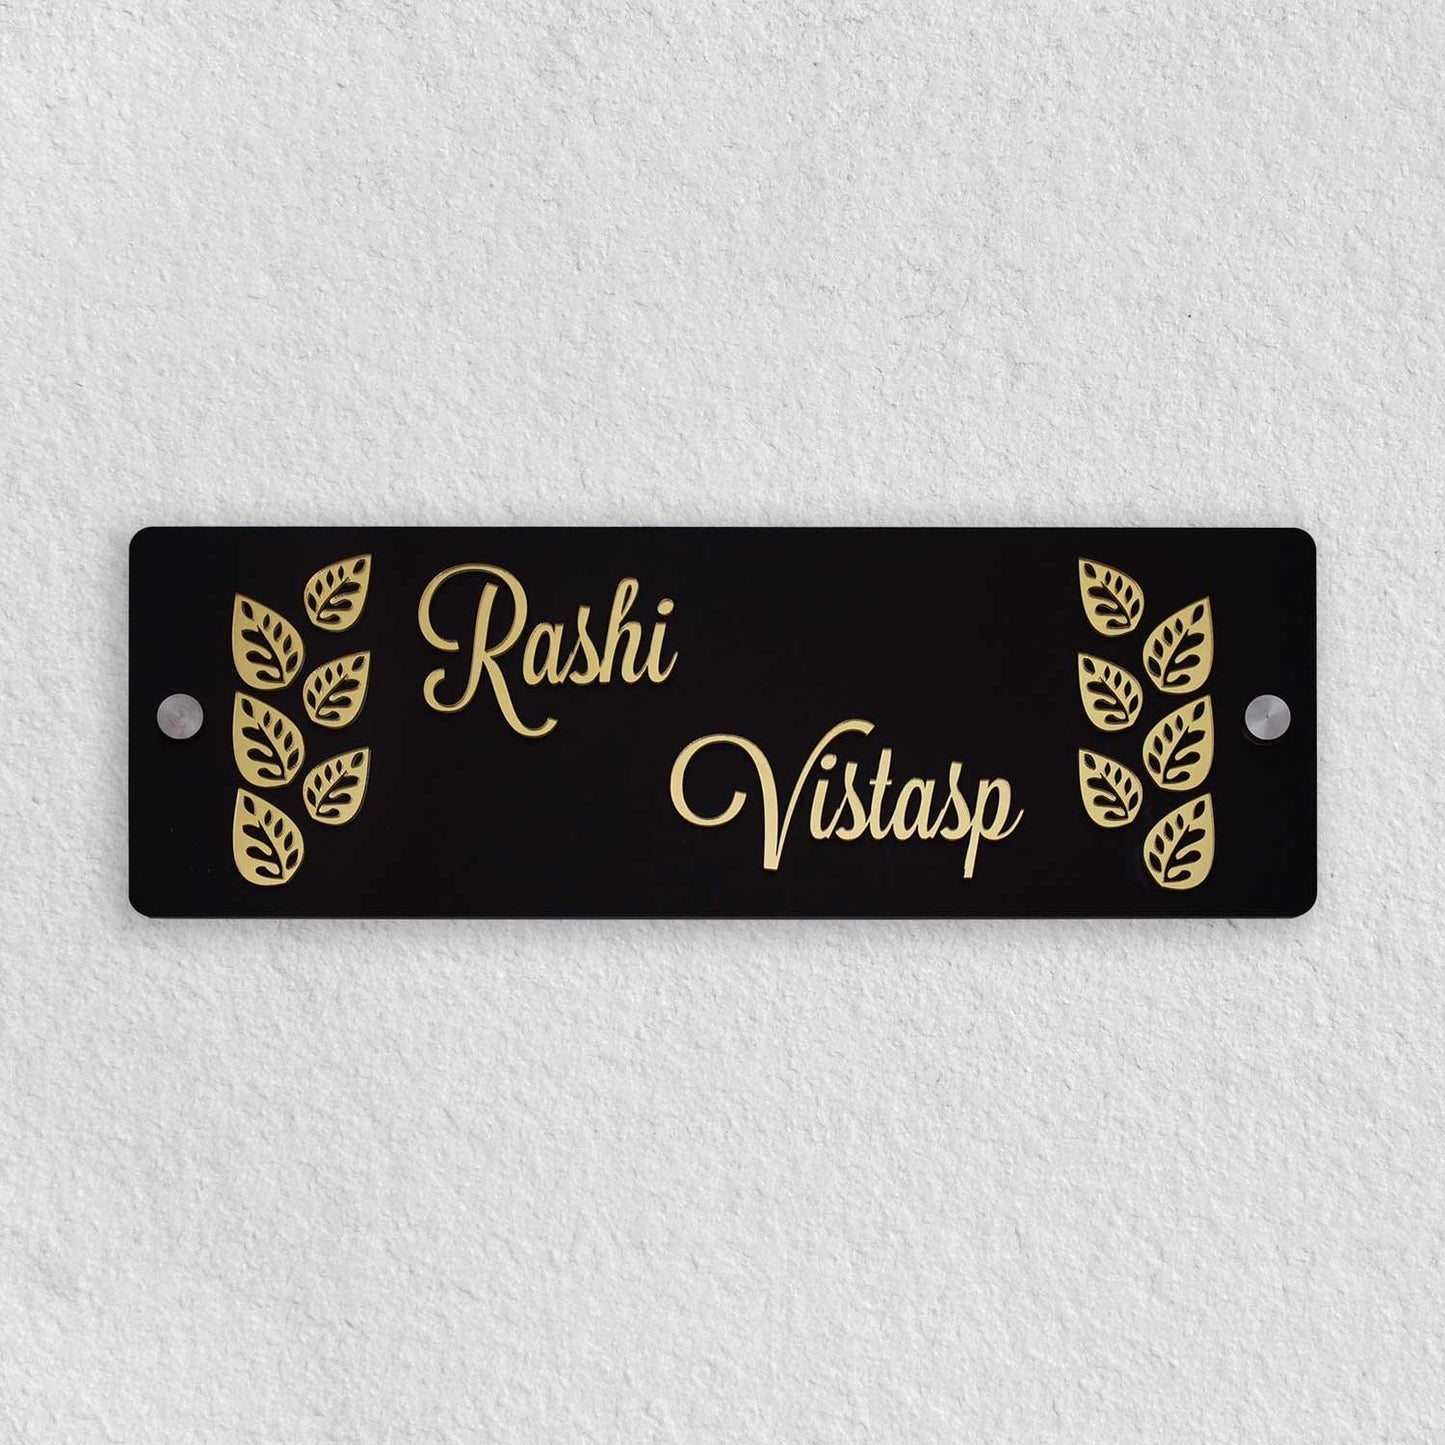 Rashi Vistasp - Acrylic Name Plate with Raised Lettering - Housenama